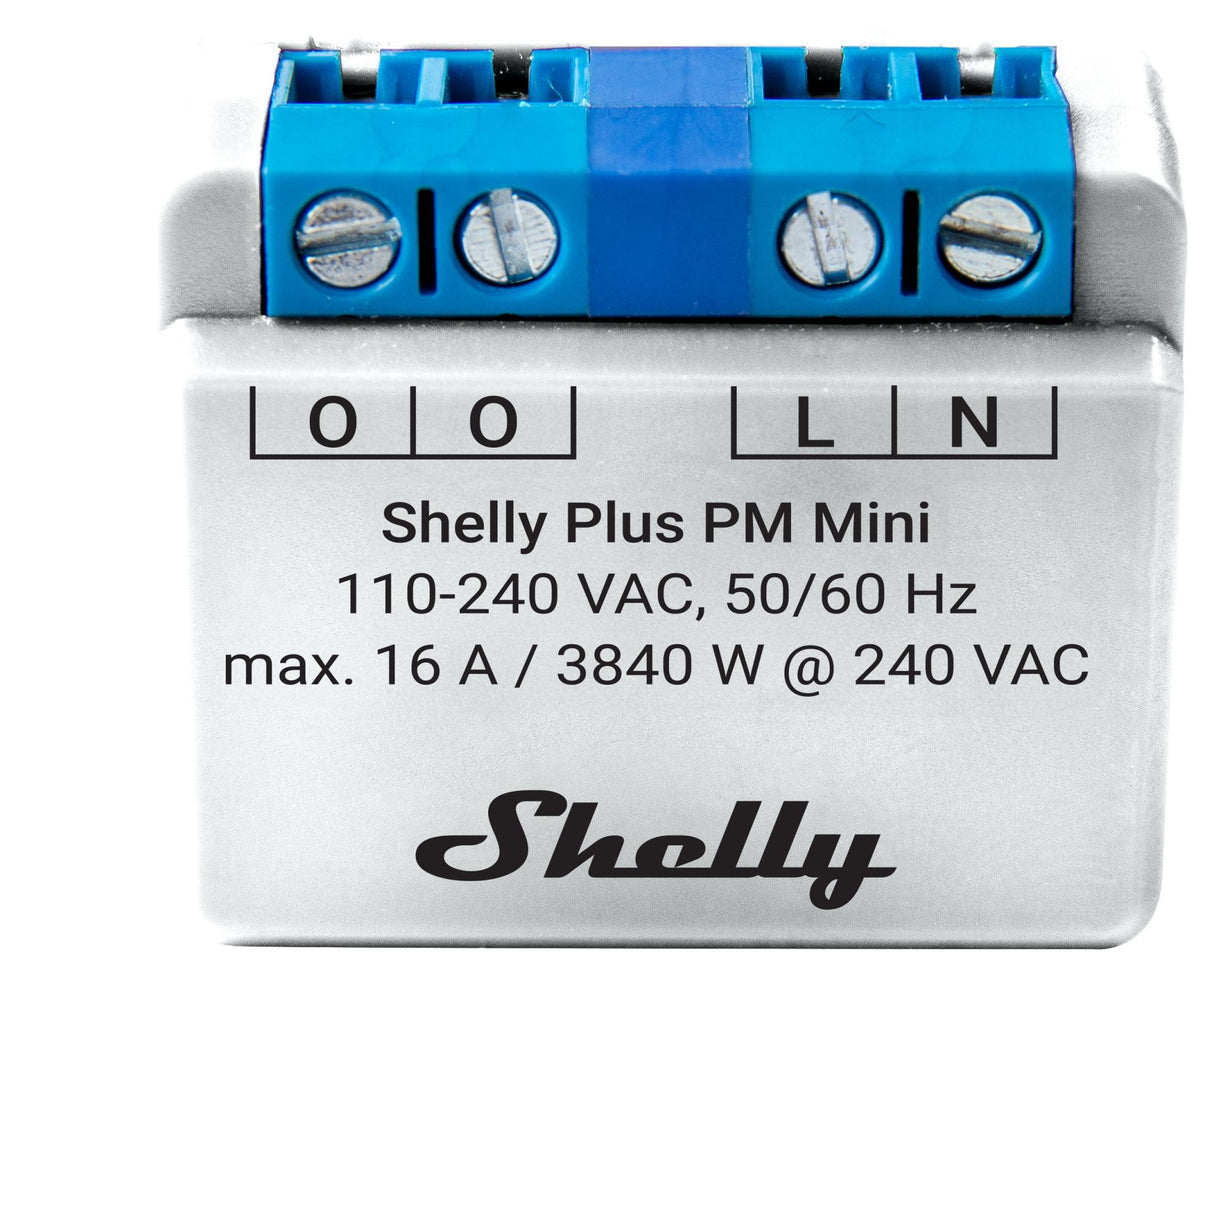 Shelly Plus PM Mini - Leistungsmesser - WLAN & Bluetooth - Smart Home –